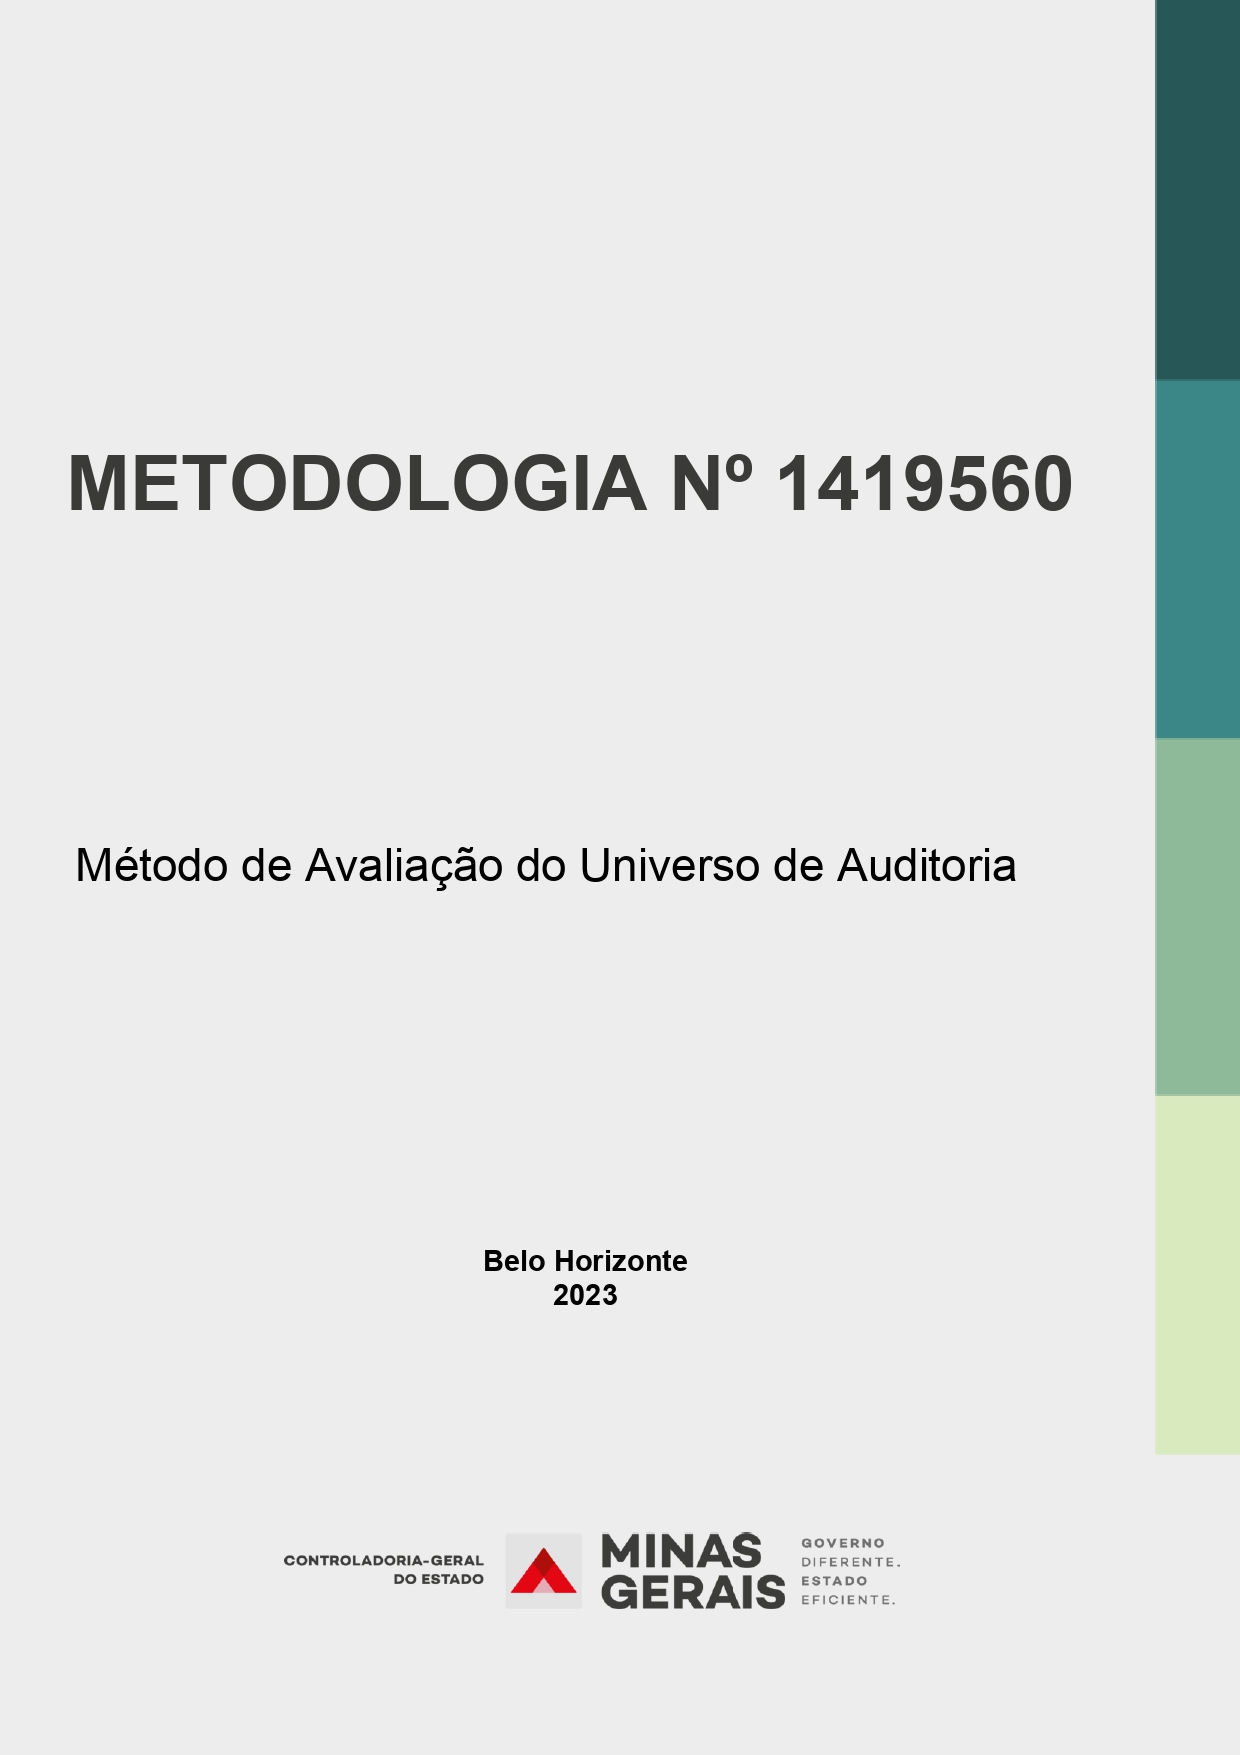 Capa relatório metodologia